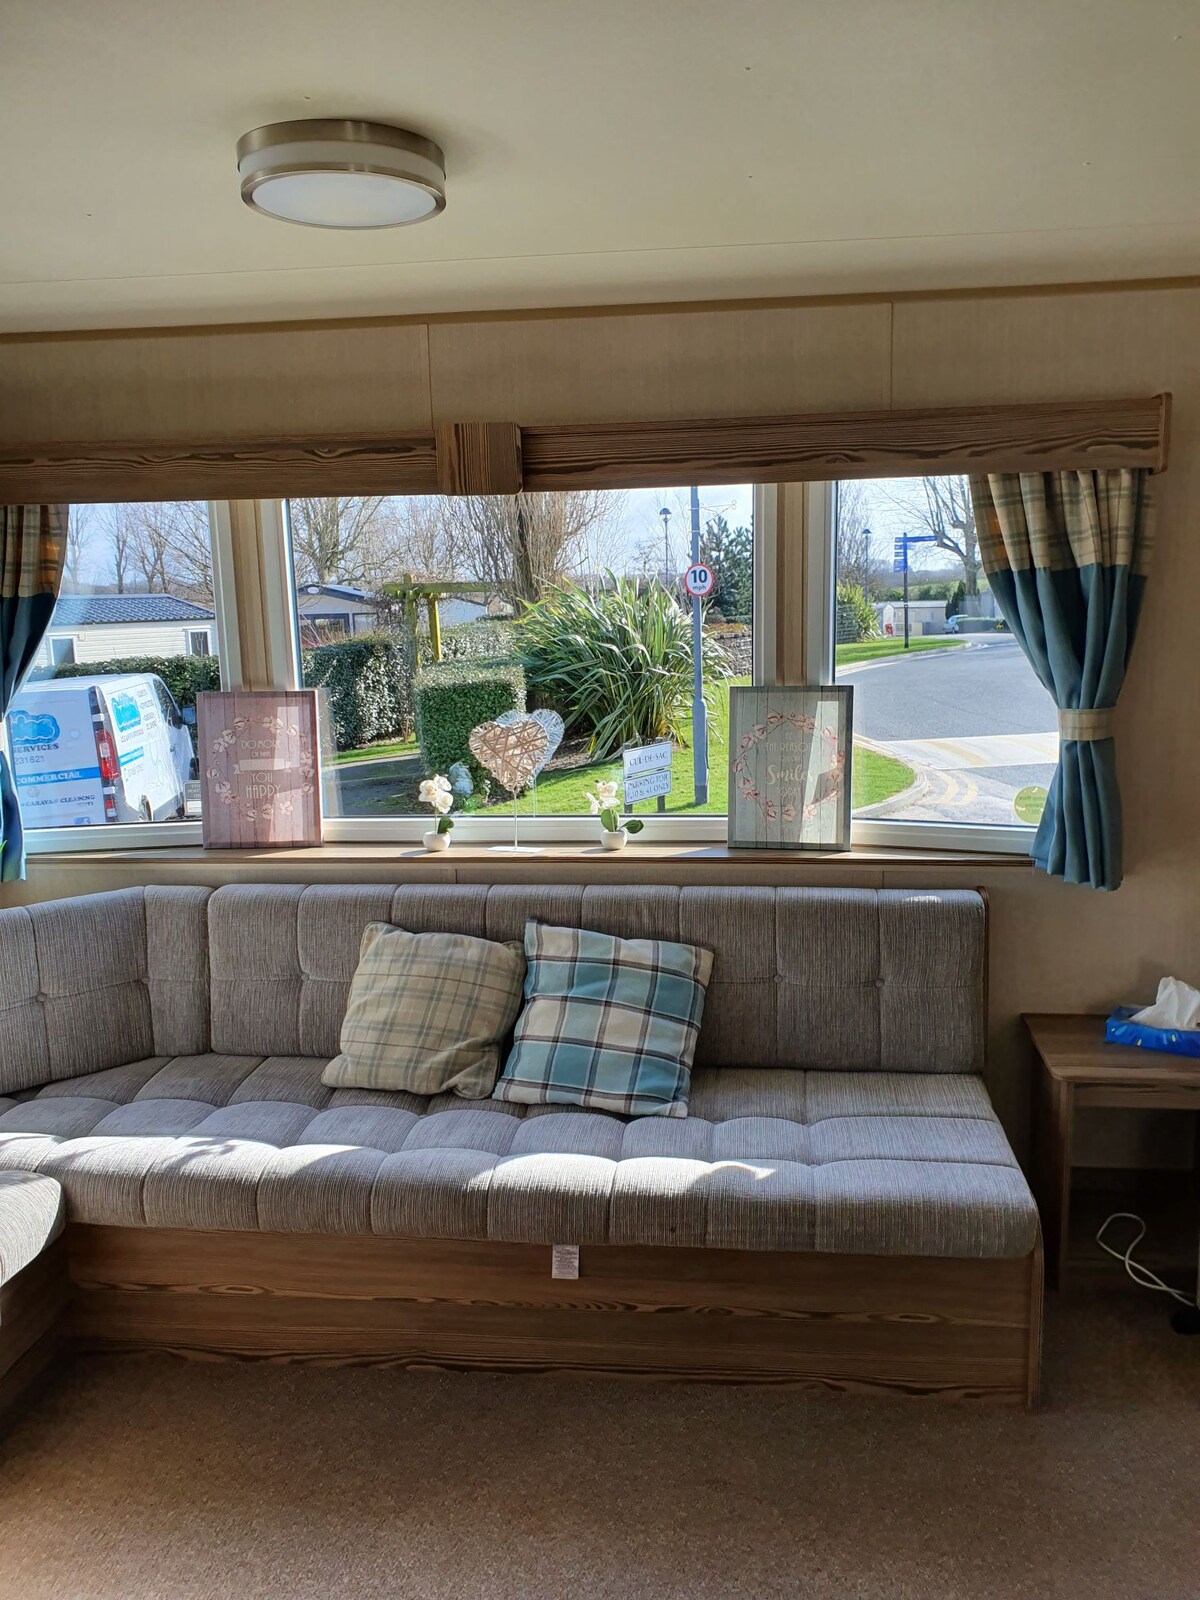 3 Bed Caravan for Hire Marton Mere in Blackpool